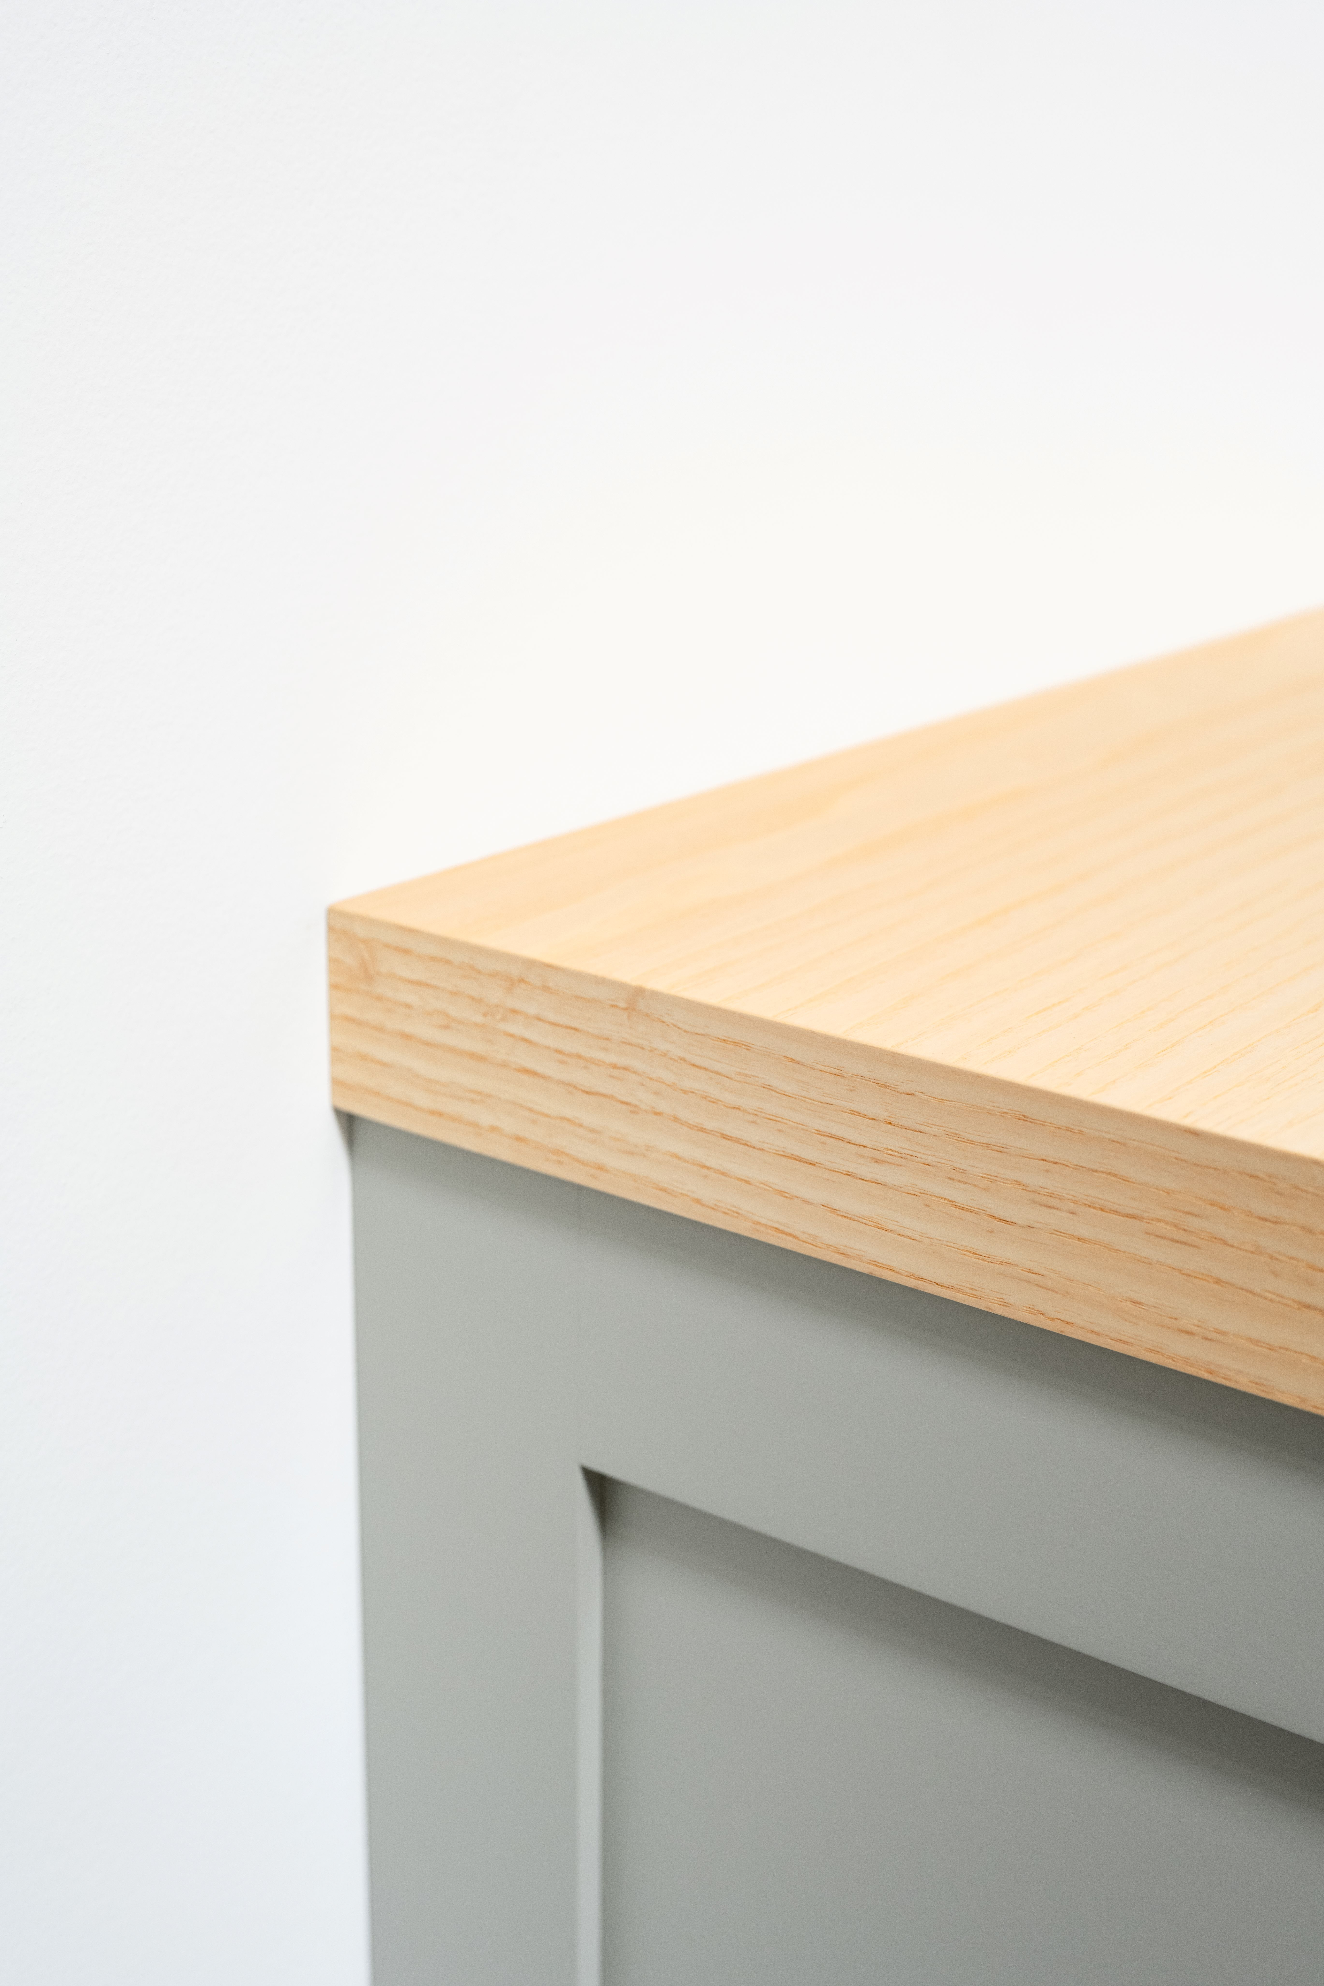 Ash 1.75" thick Cabinet Top / Slab Shelf